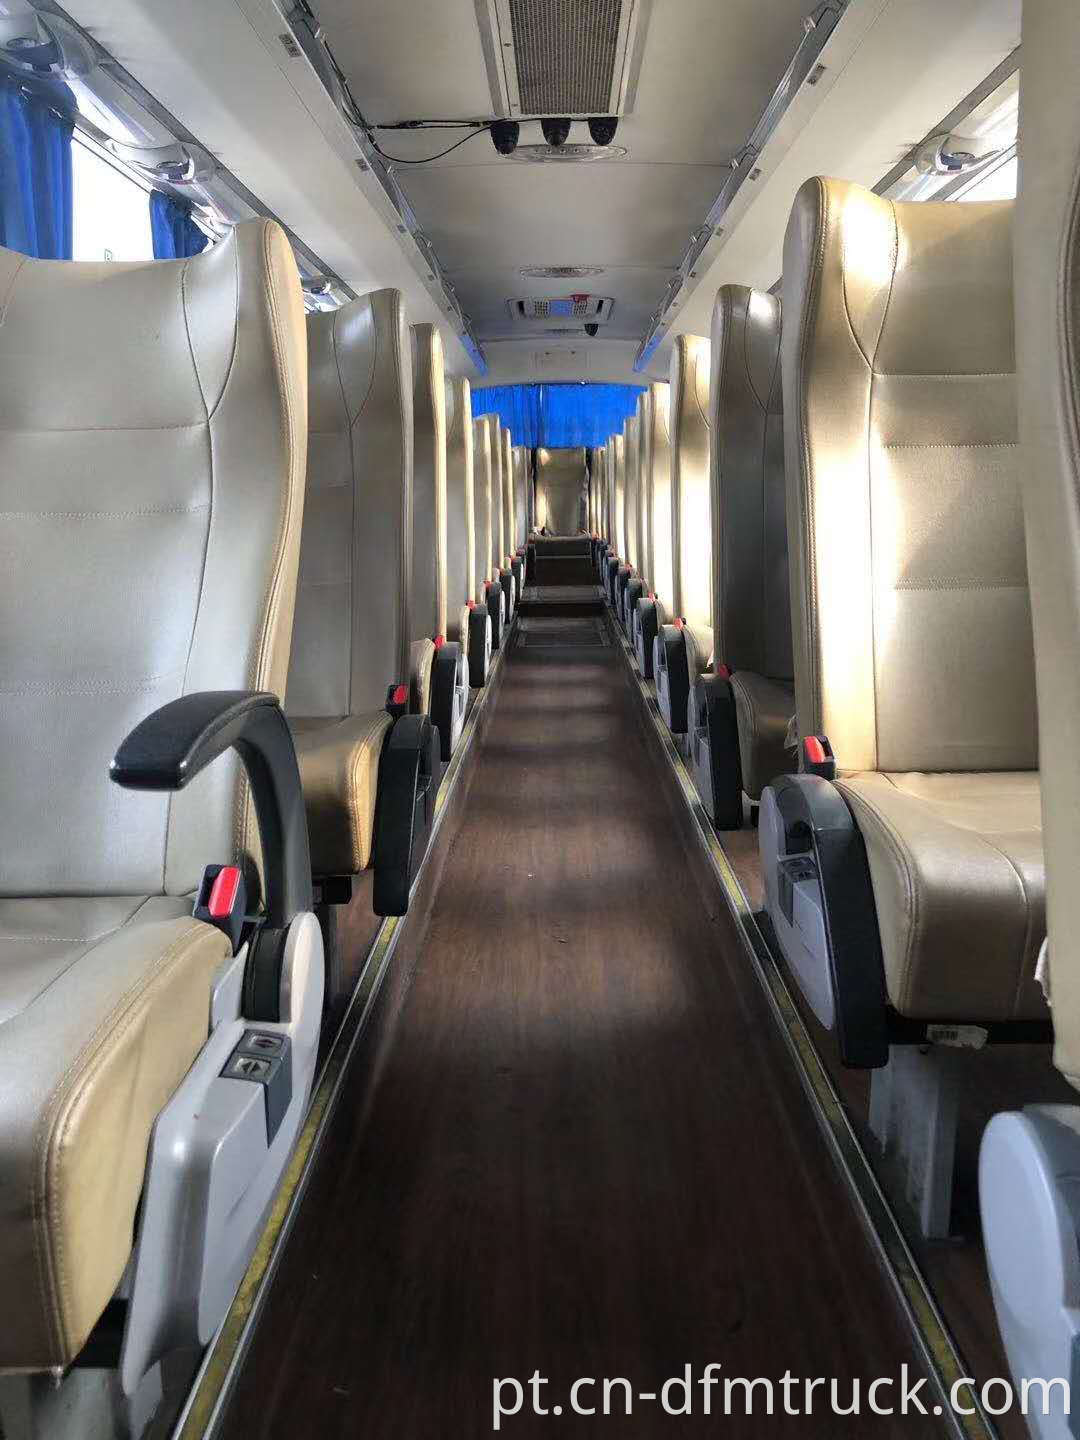 48 Seats Rice Coach Bus 1